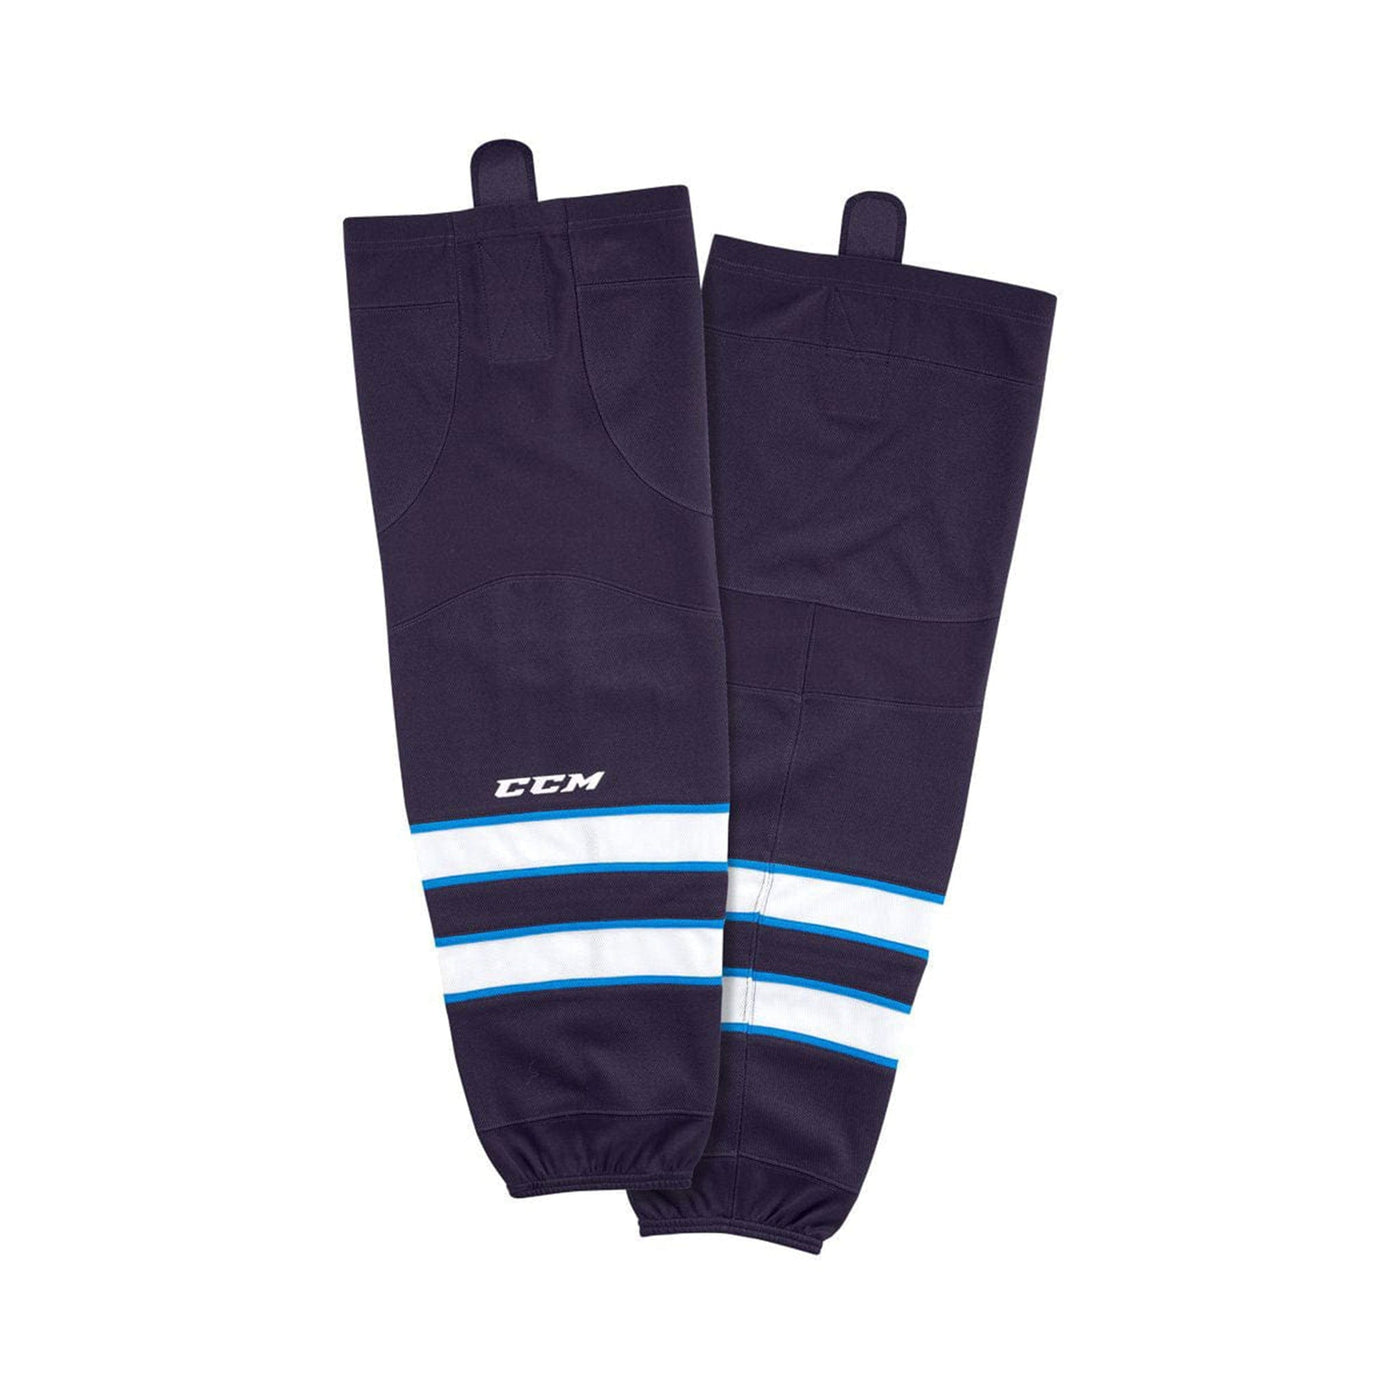 Winnipeg Jets Home CCM Quicklite 8000 Hockey Socks - The Hockey Shop Source For Sports